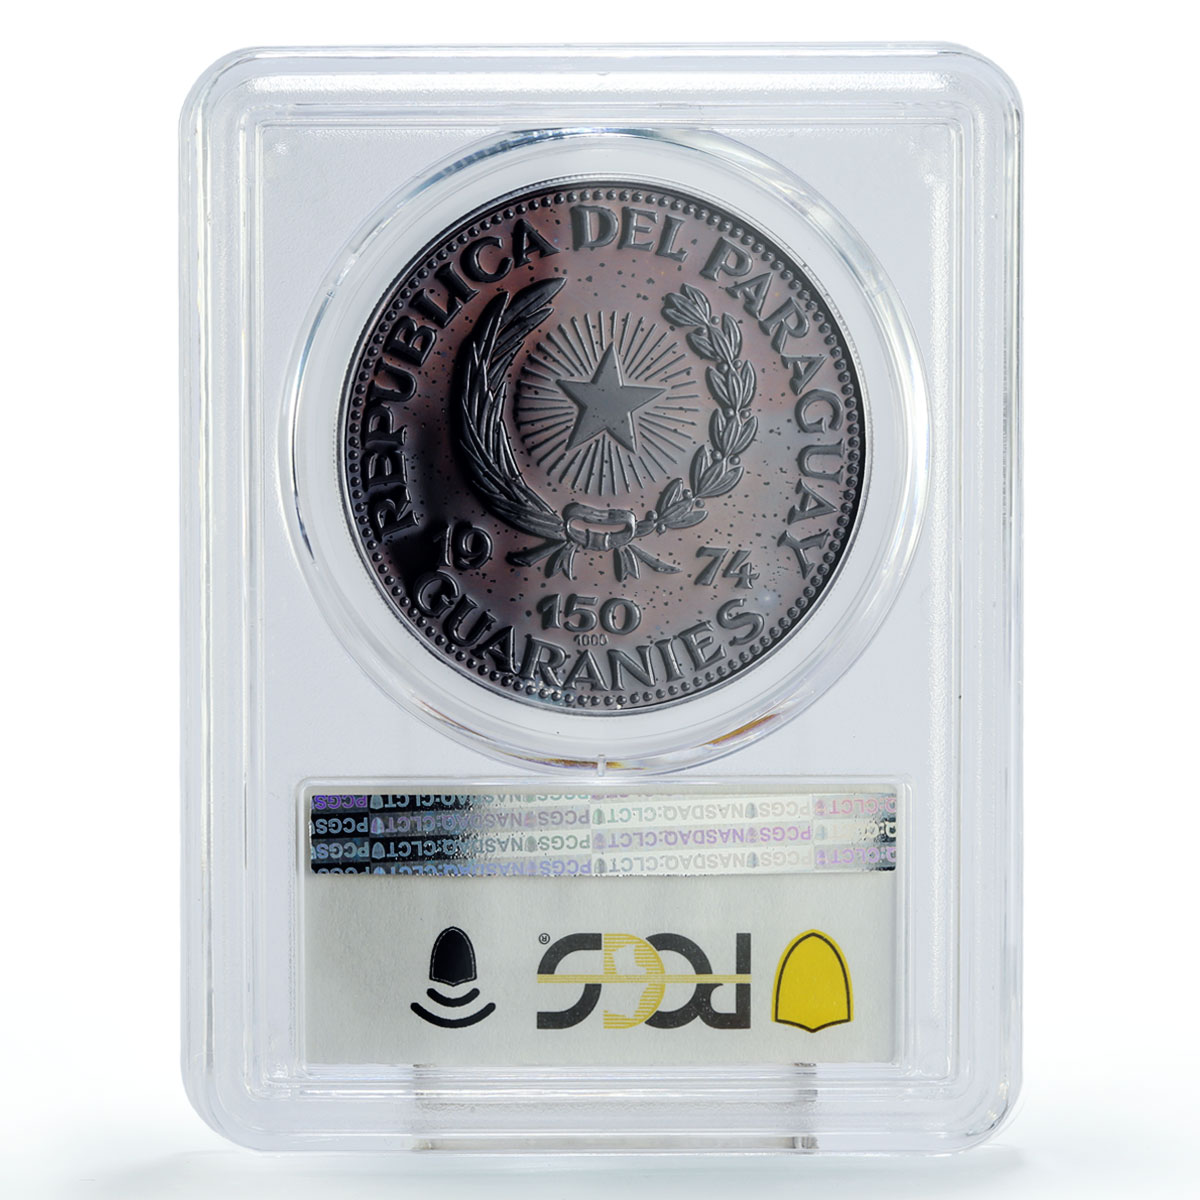 Paraguay 150 guaranies President John F. Kennedy PR65 PCGS silver coin 1974